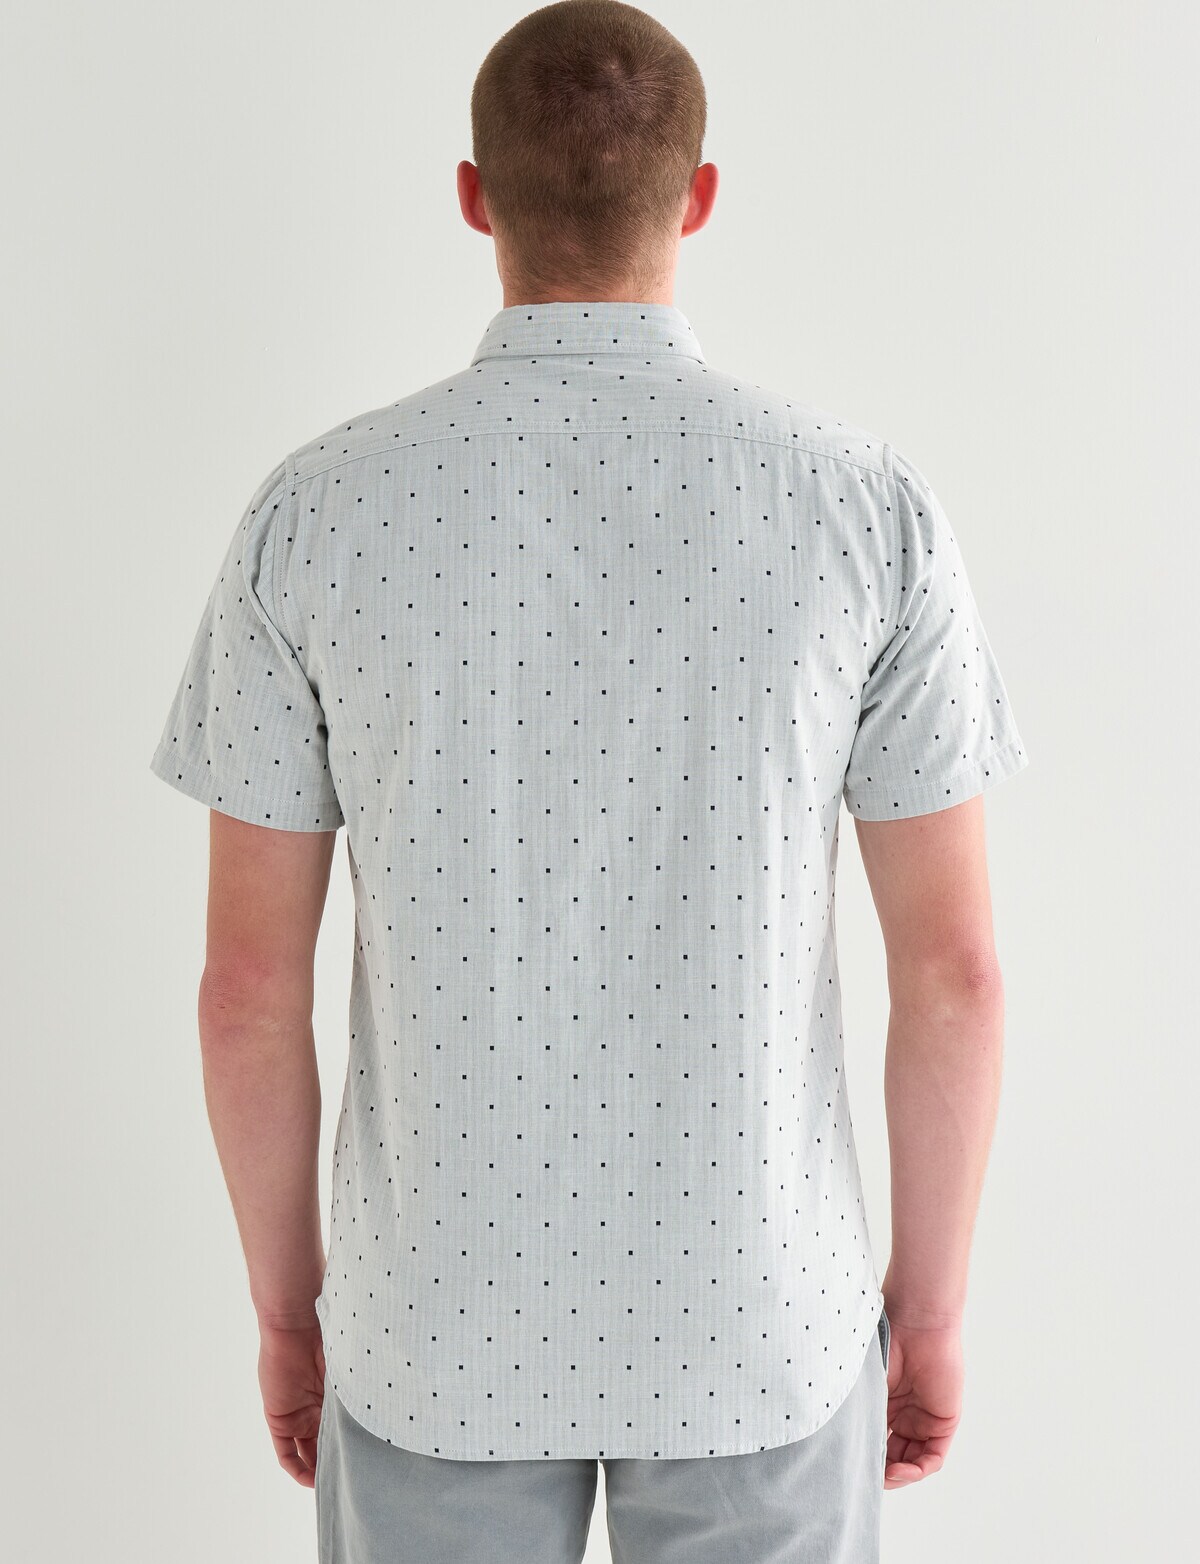 Tarnish Double Layer Dot Shirt, White - Casual Shirts